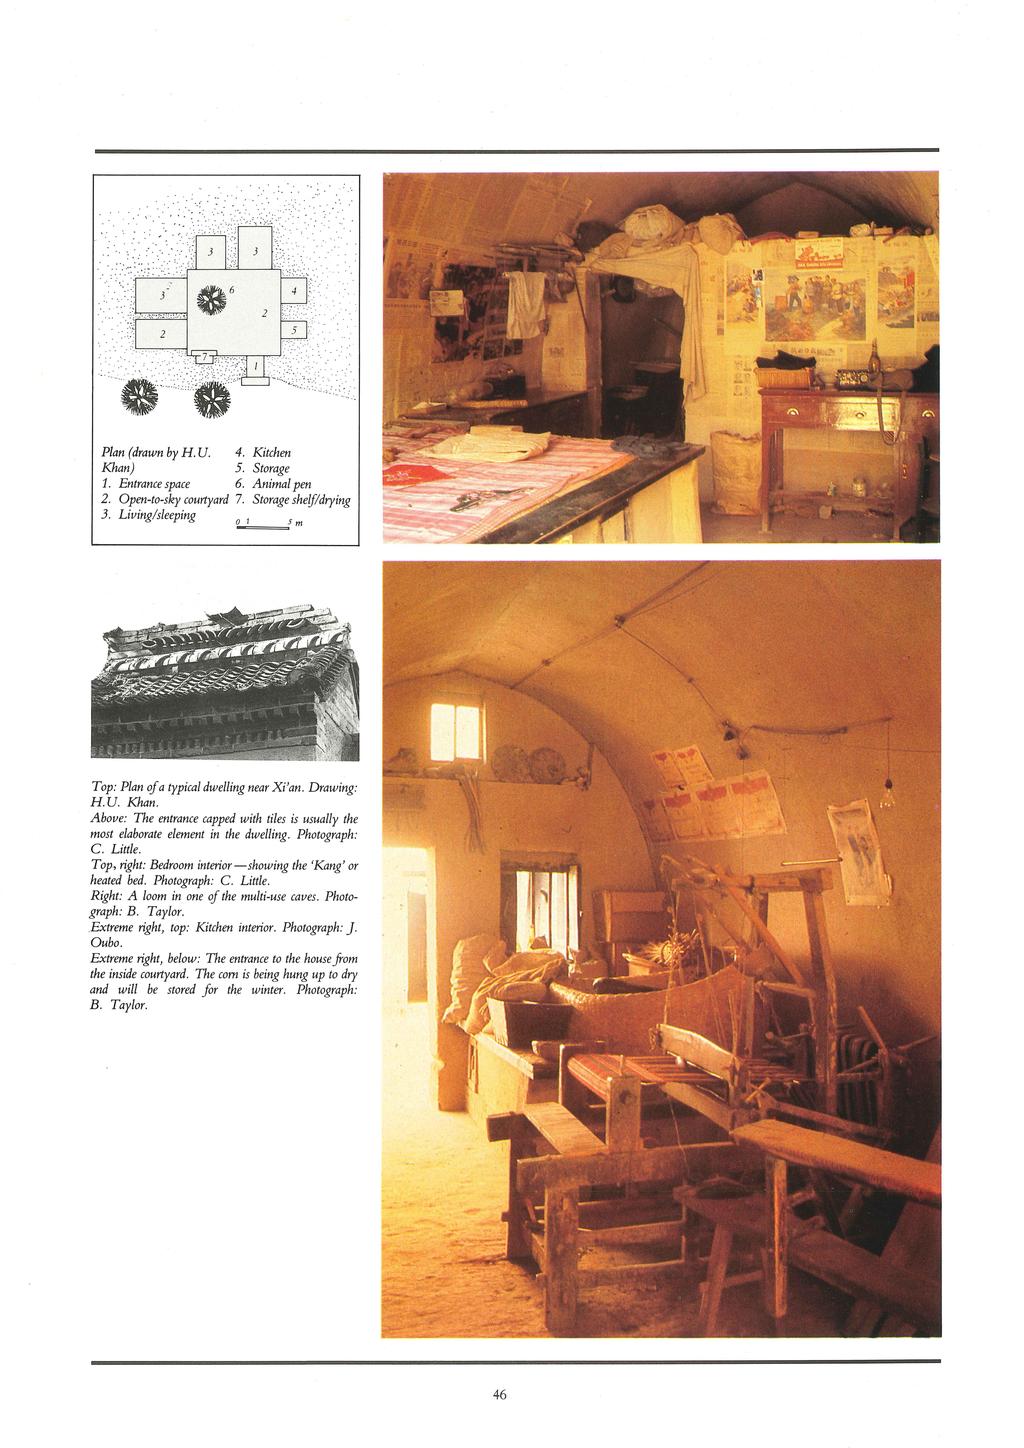 Plan (drawn by H. U. Khan) 1. Entrance space 2. Open-to-sky courtyard 3. Living/sleeping 4. 5. 6. 7. Kitchen Storage Animal pen Storage shelf/drying Top: Plan of a typical dwelling near Xi'an.